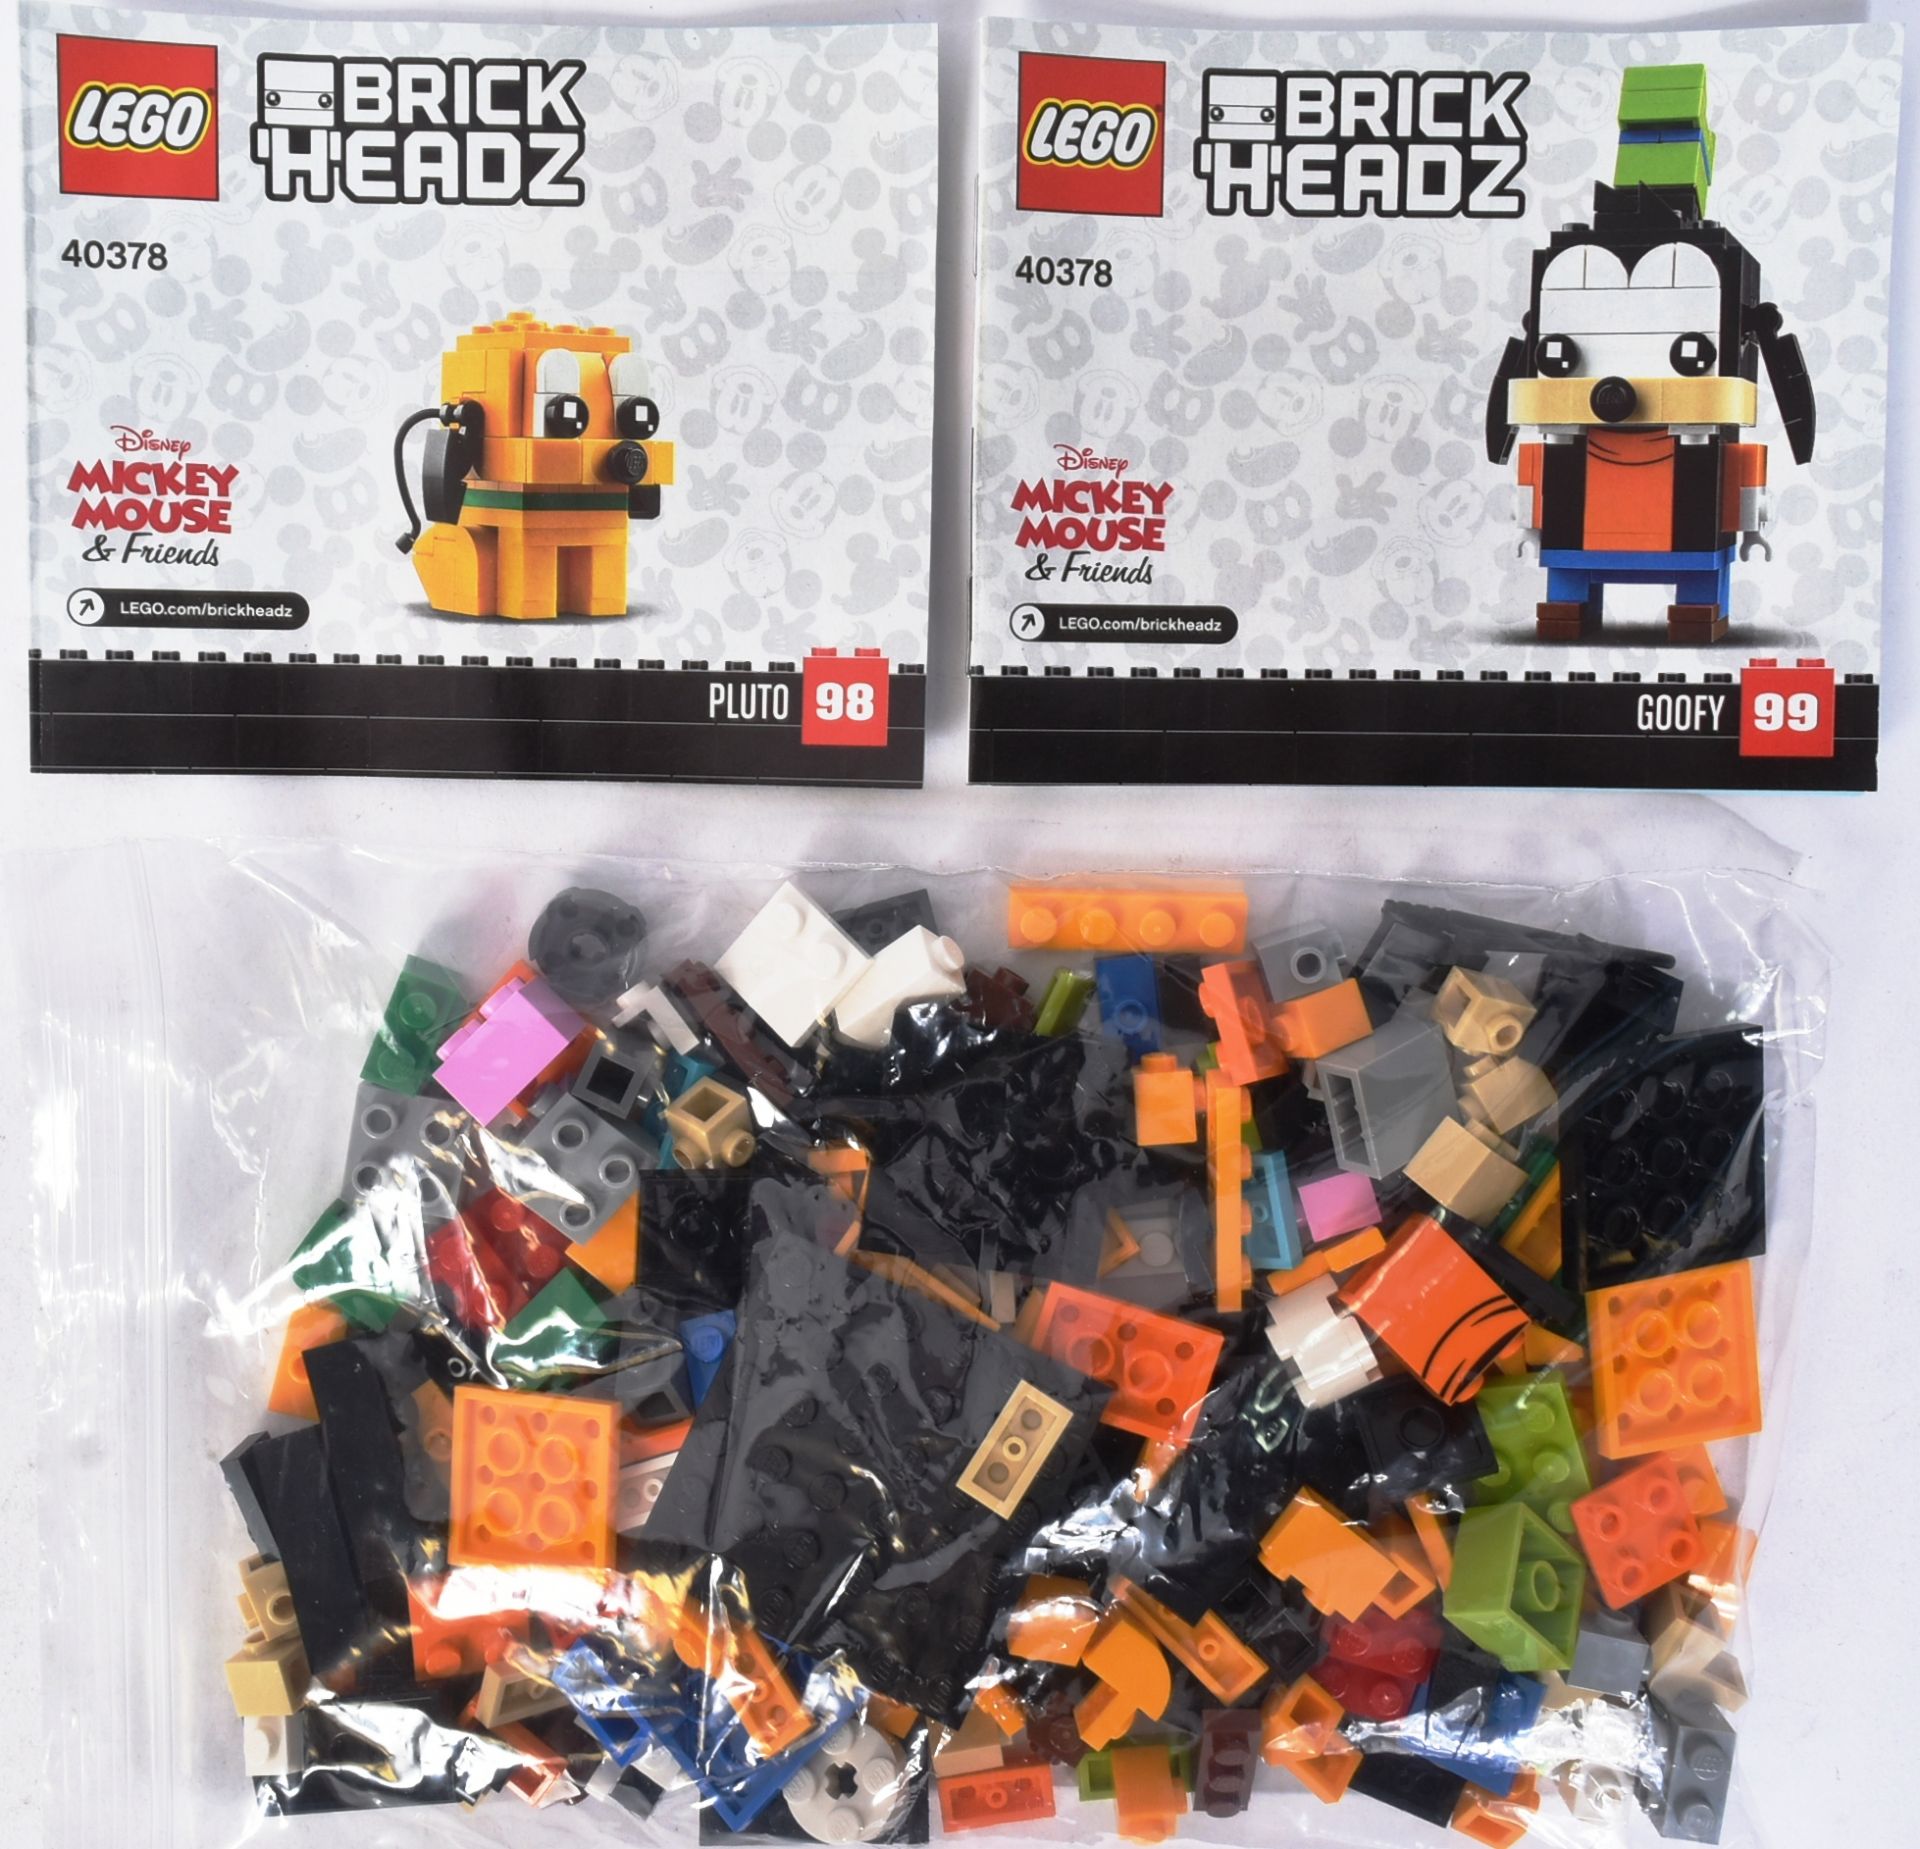 LEGO - BRICKHEADZ - DONALD DUCK, PLUTO & GOOFY - Image 3 of 4